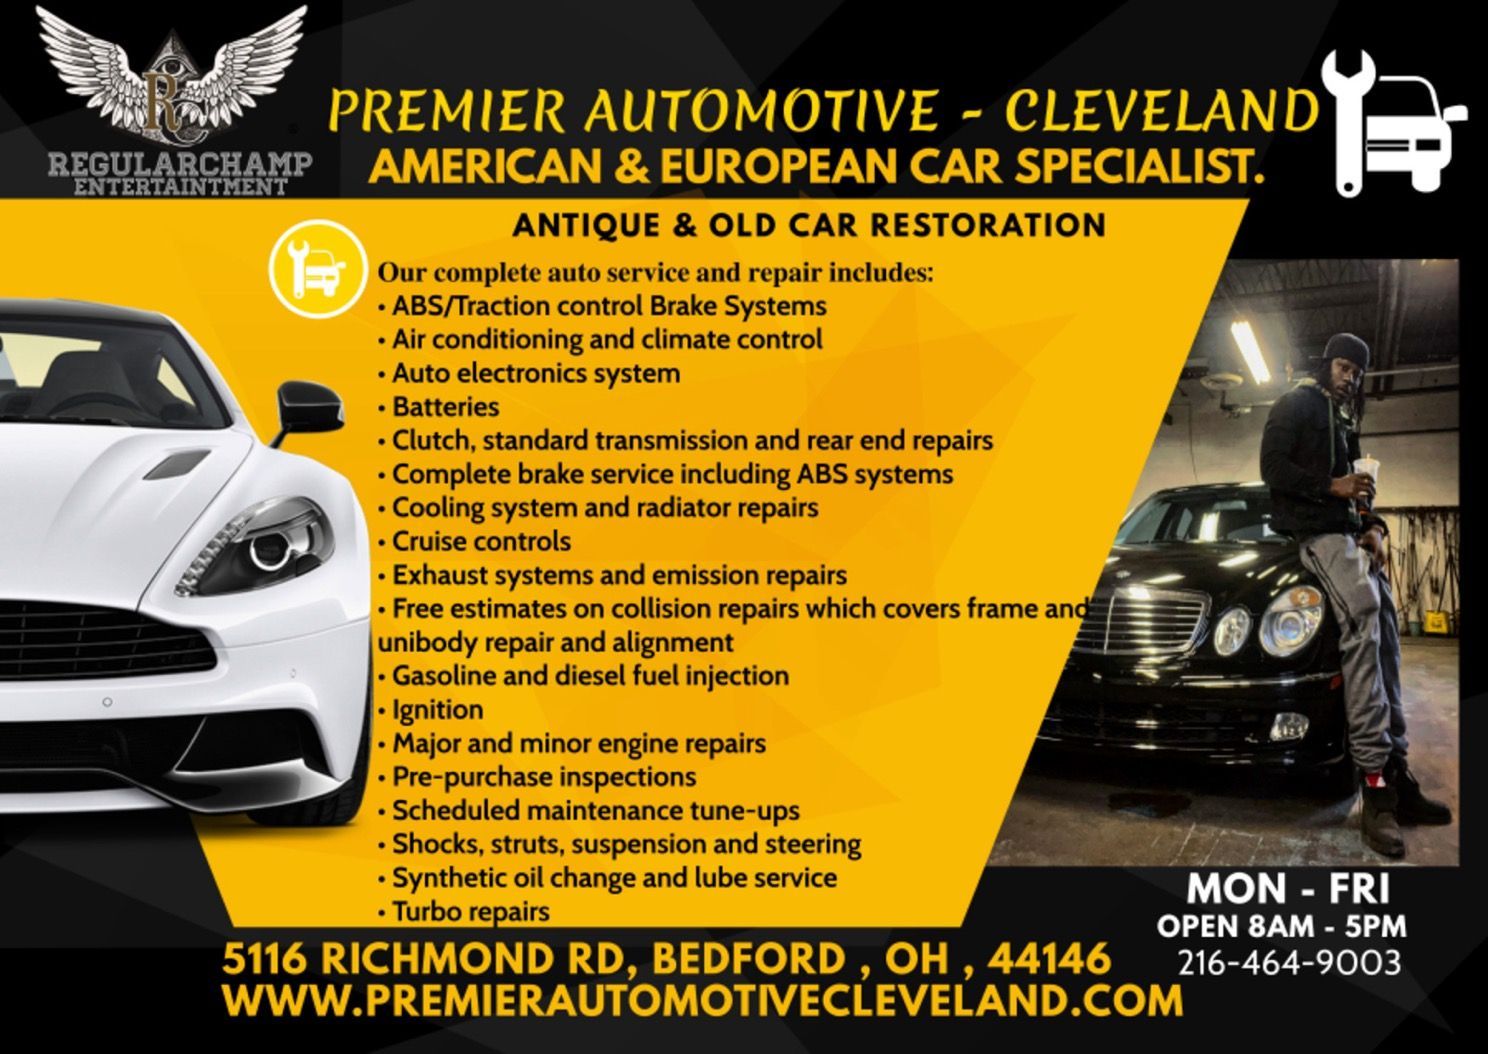 a flyer for Premier Automotive of Cleveland